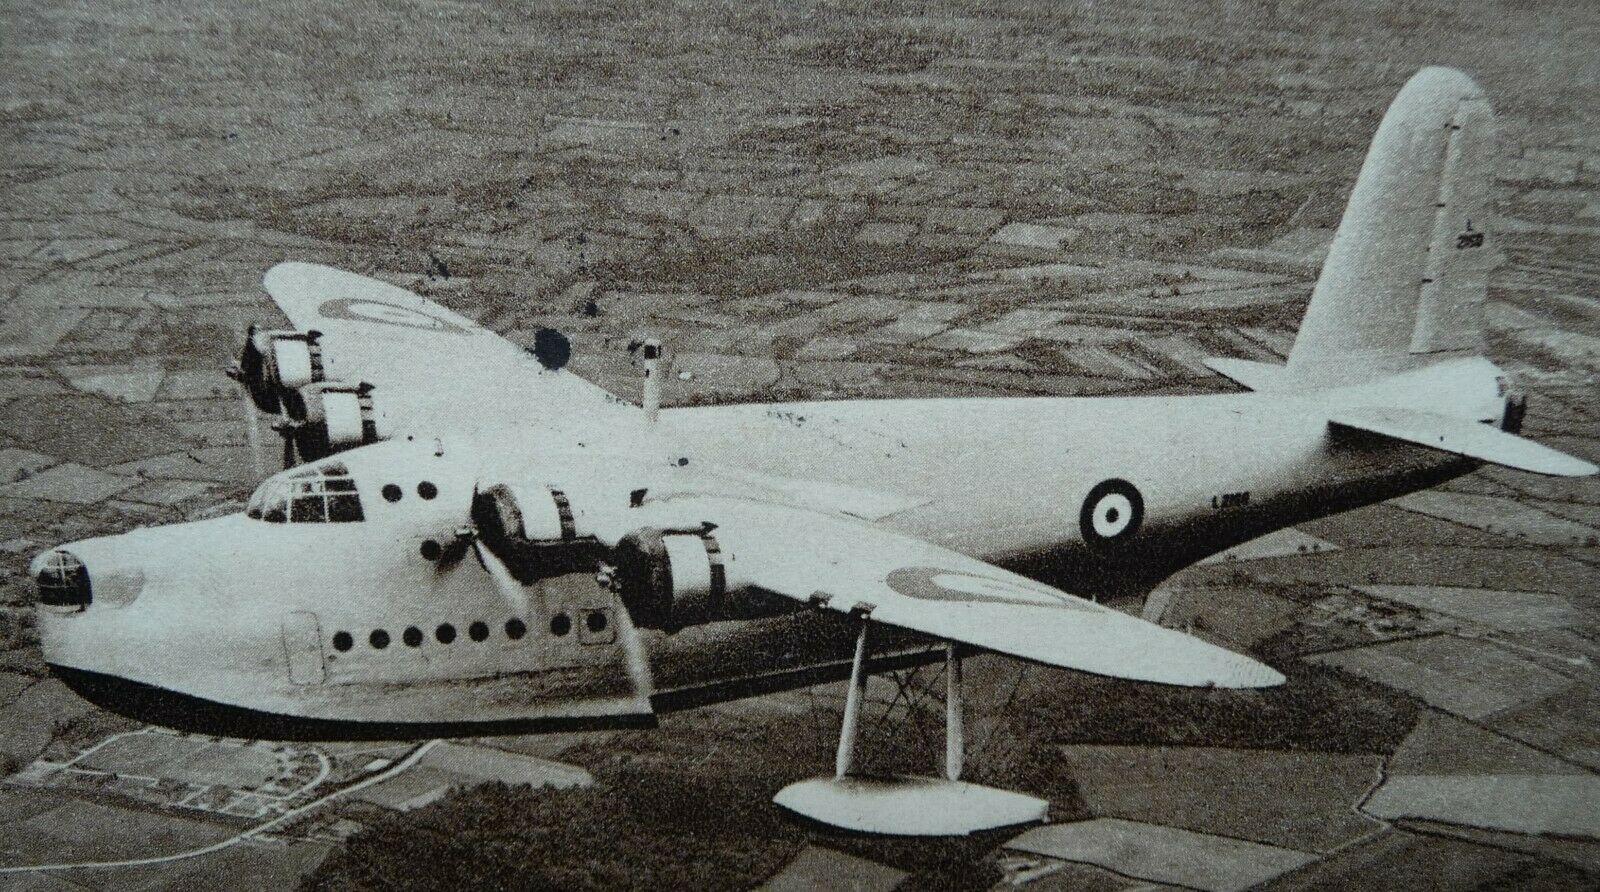 House Clearance - RAF SHORT SUNDERLAND MK.I POSTCARD POSTED PRESTON 1941